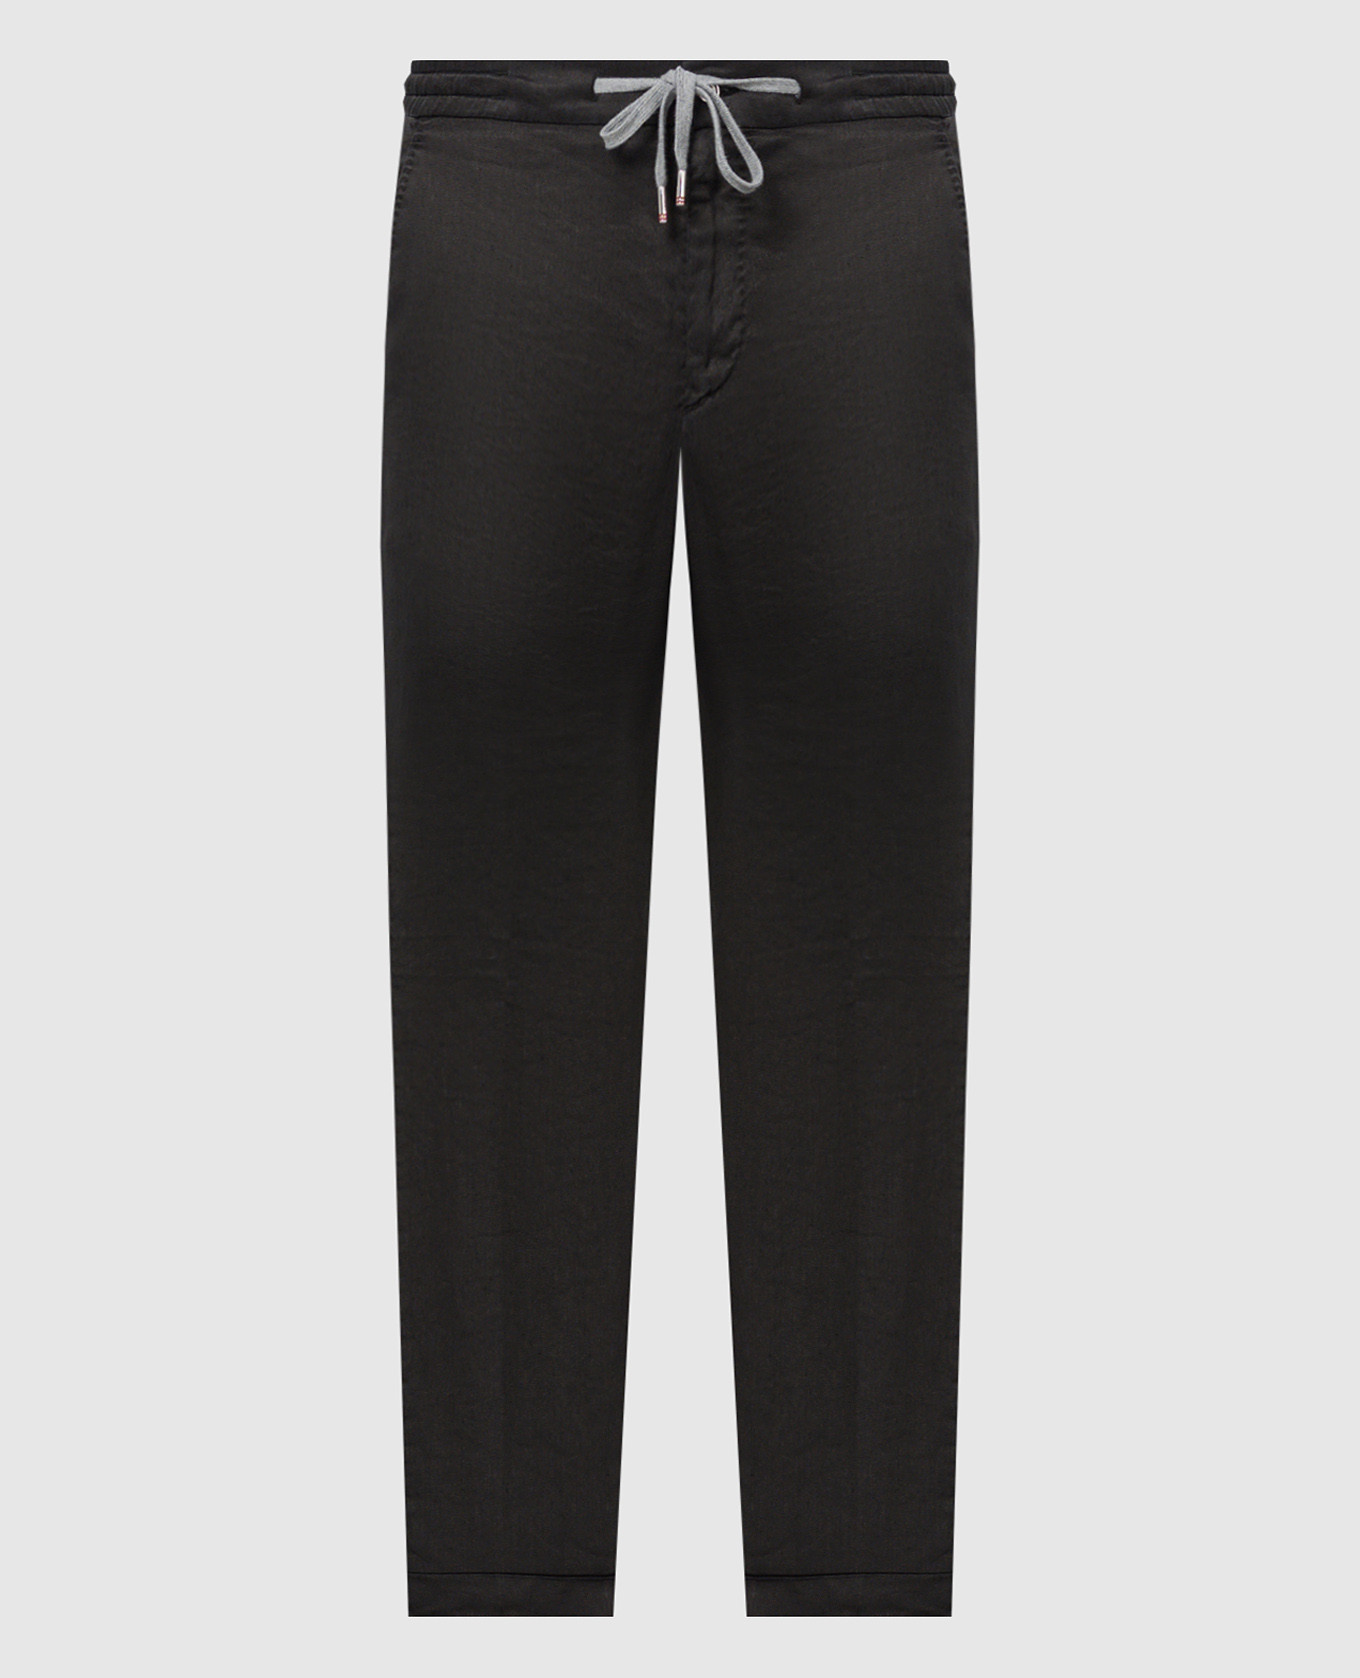 CARACCIOLO black trousers with linen